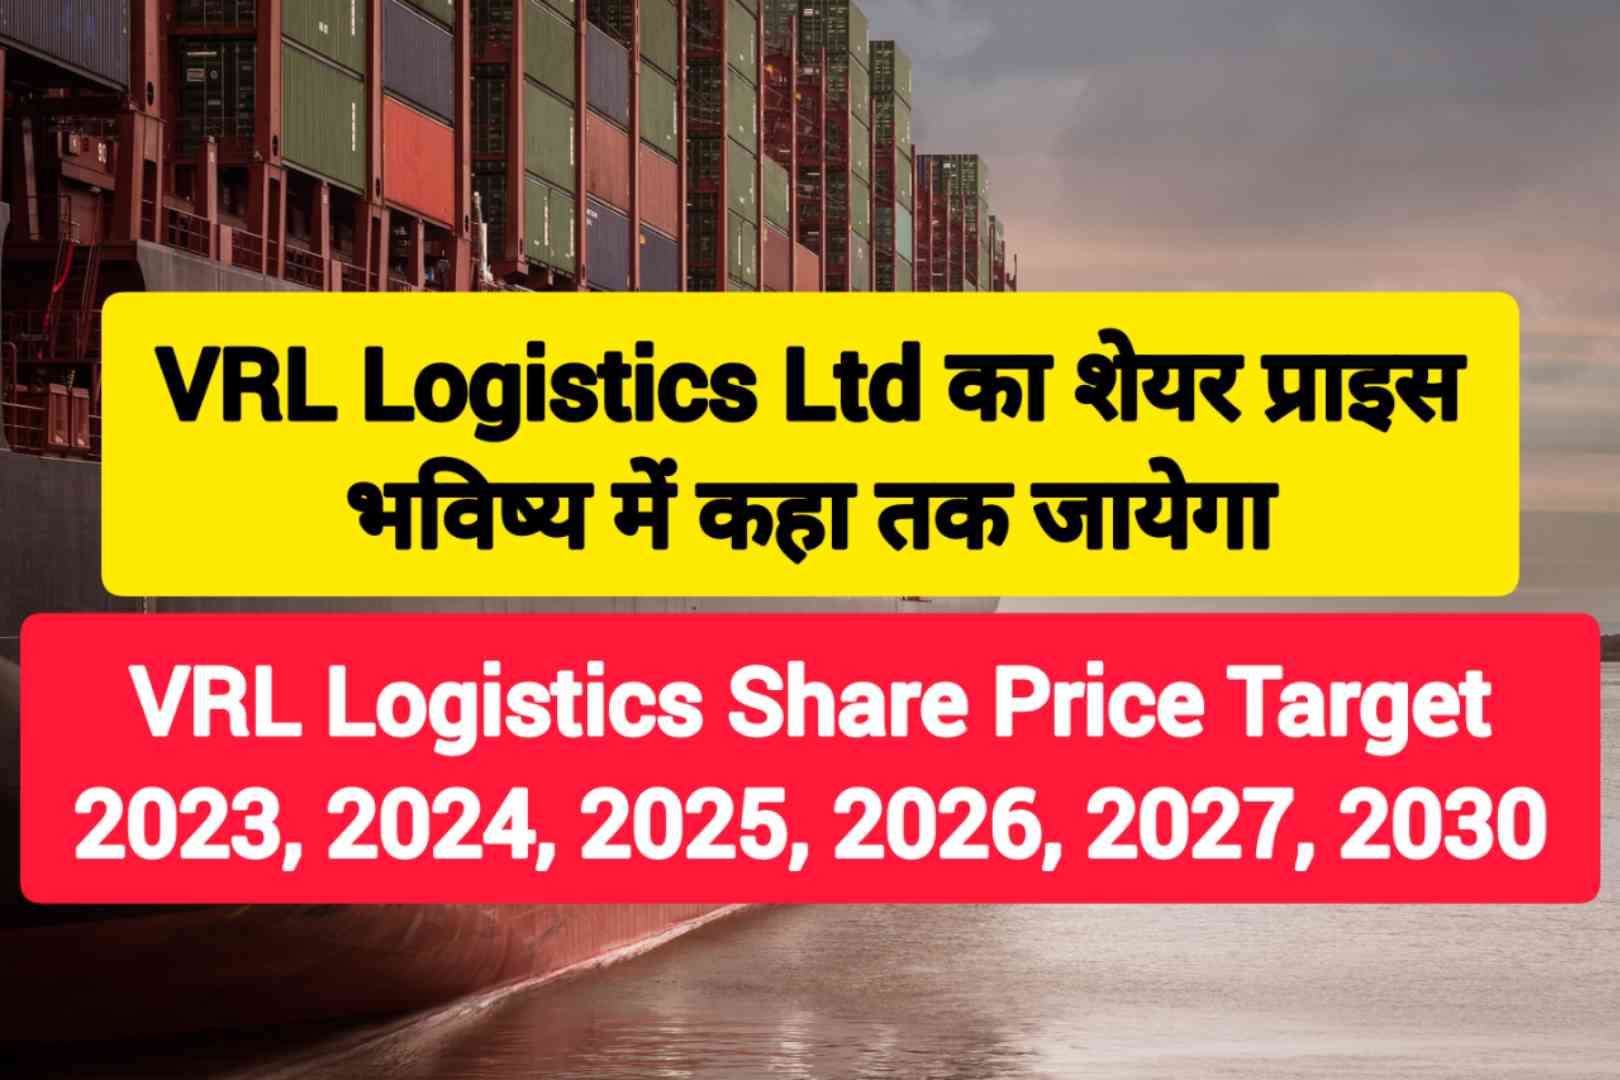 VRL Logistics Share Price target 2023, 2024, 2025, 2026, 2028, 2030 बढ़िया रिटर्न मिलेगा